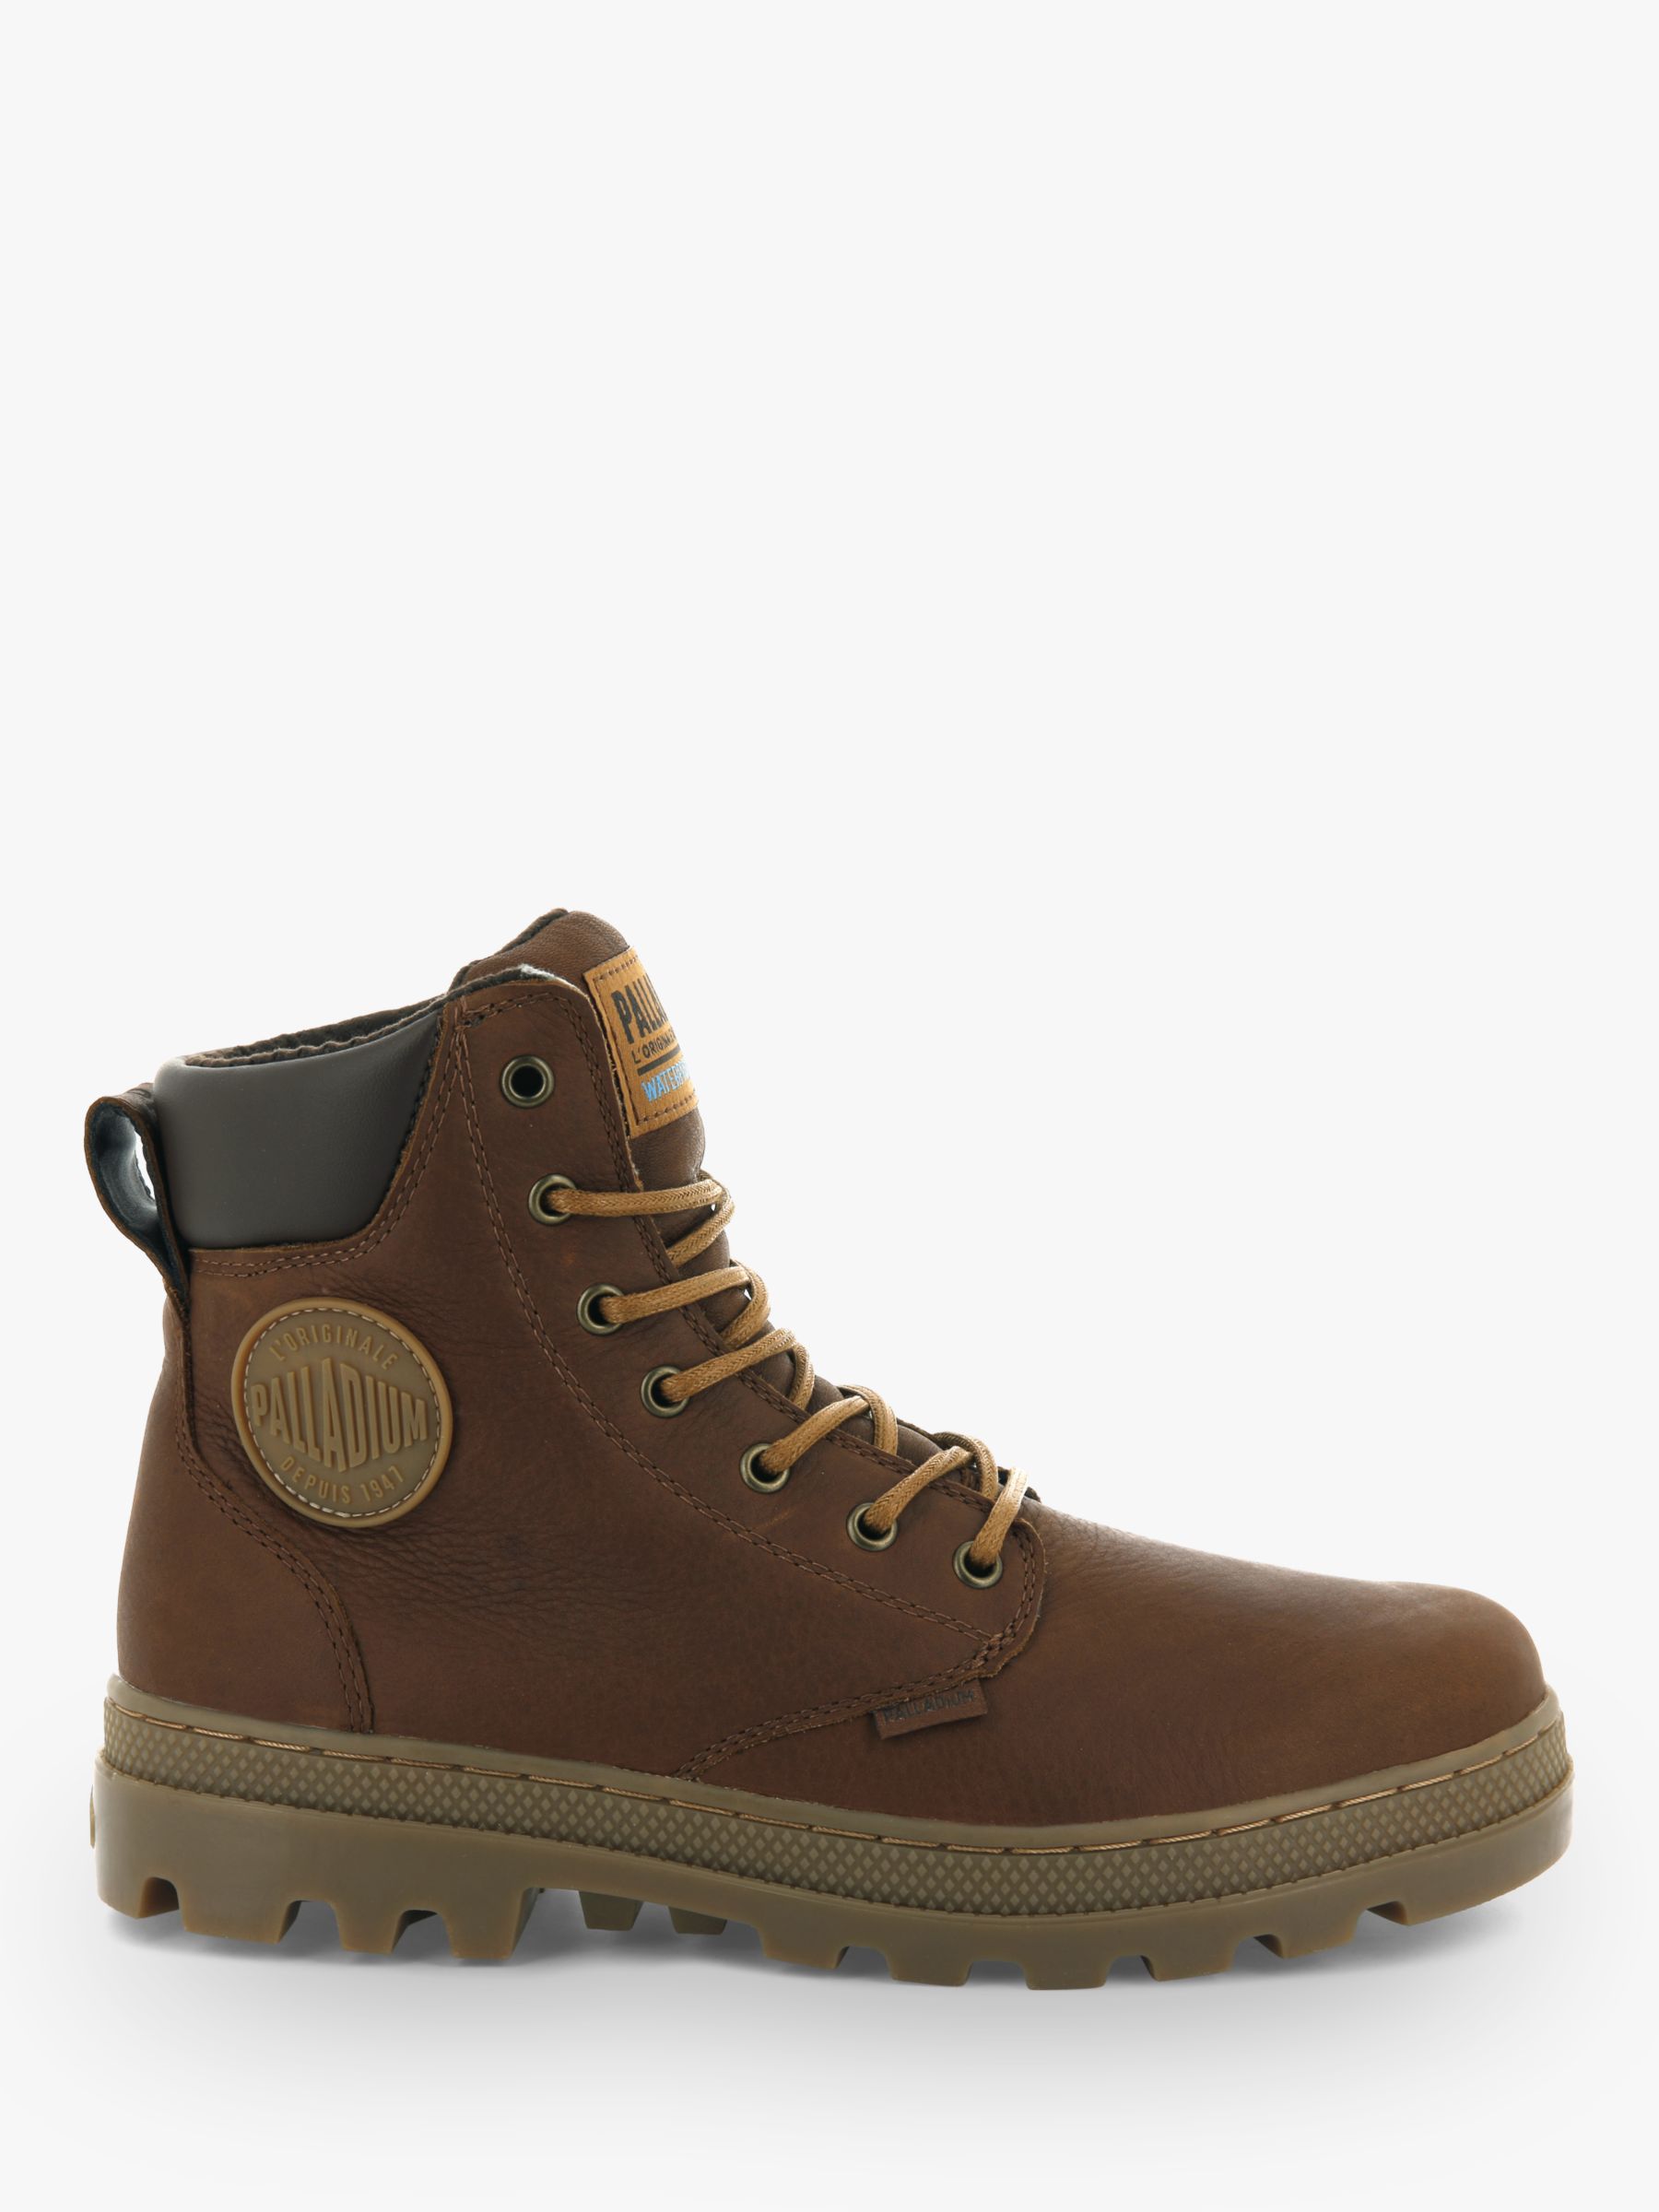 Palladium Pallabosse Sport Cuff Leather Boots, Brown